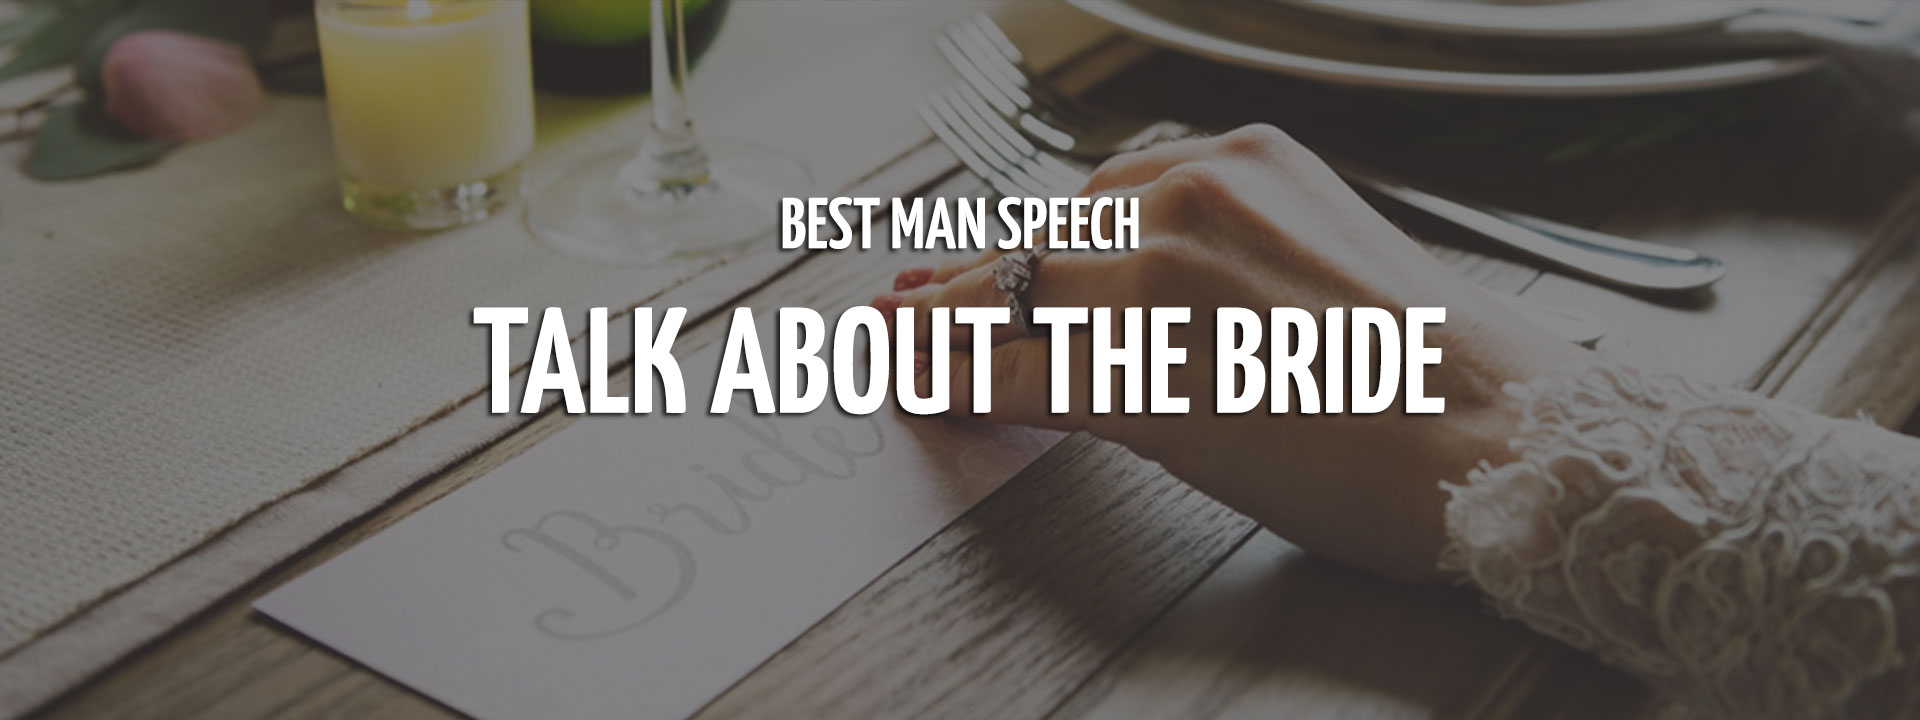 best man speech bride